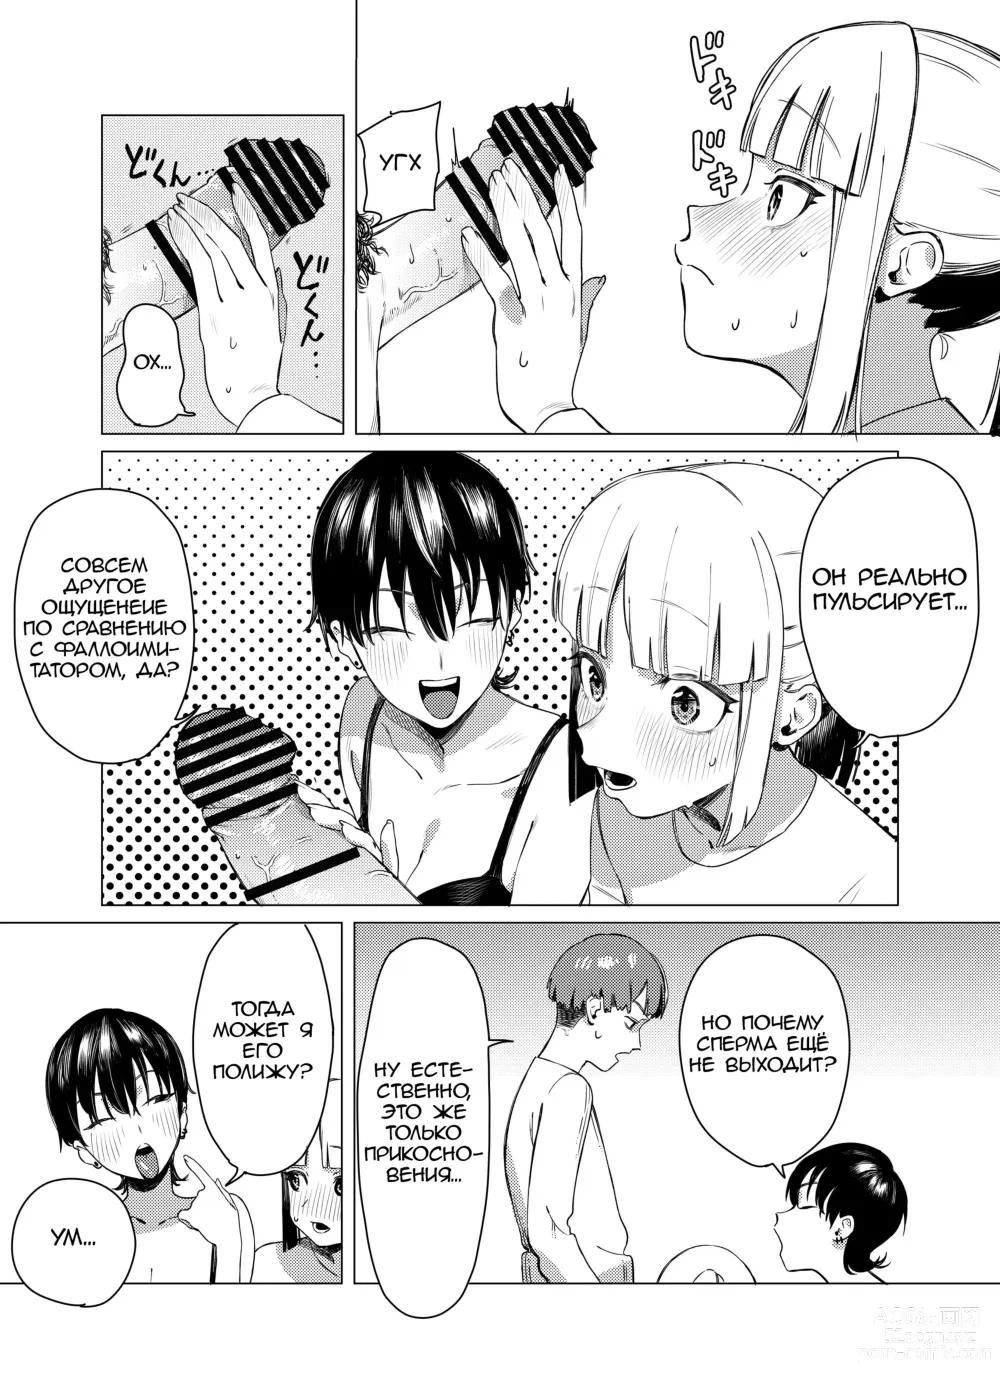 Page 6 of doujinshi Sandwiched By Yuri.